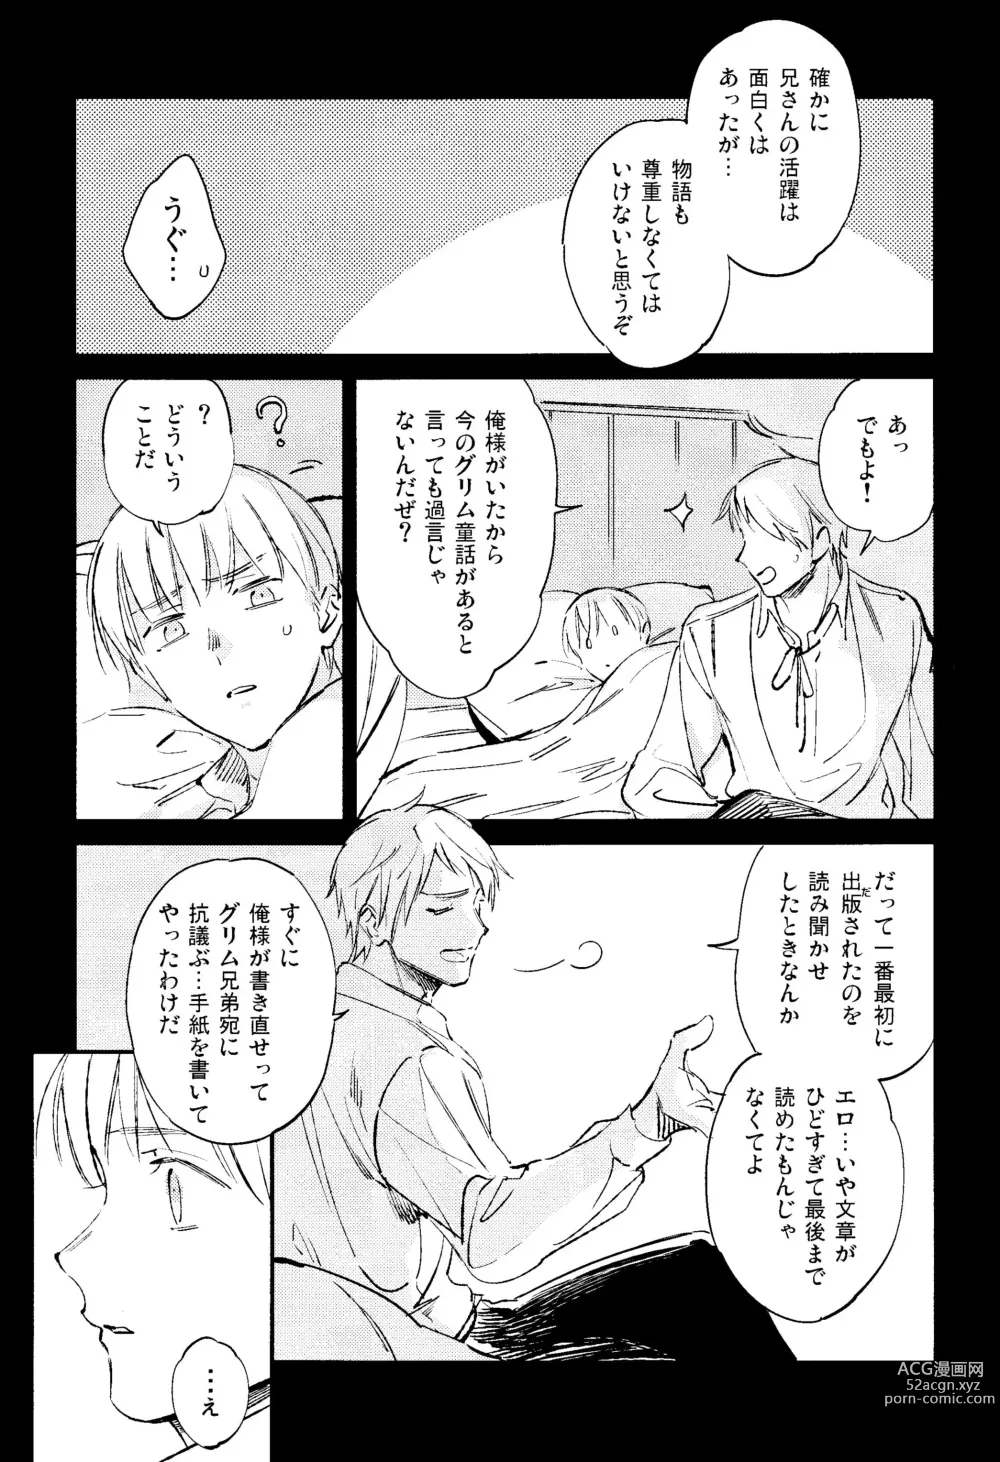 Page 5 of doujinshi Toge